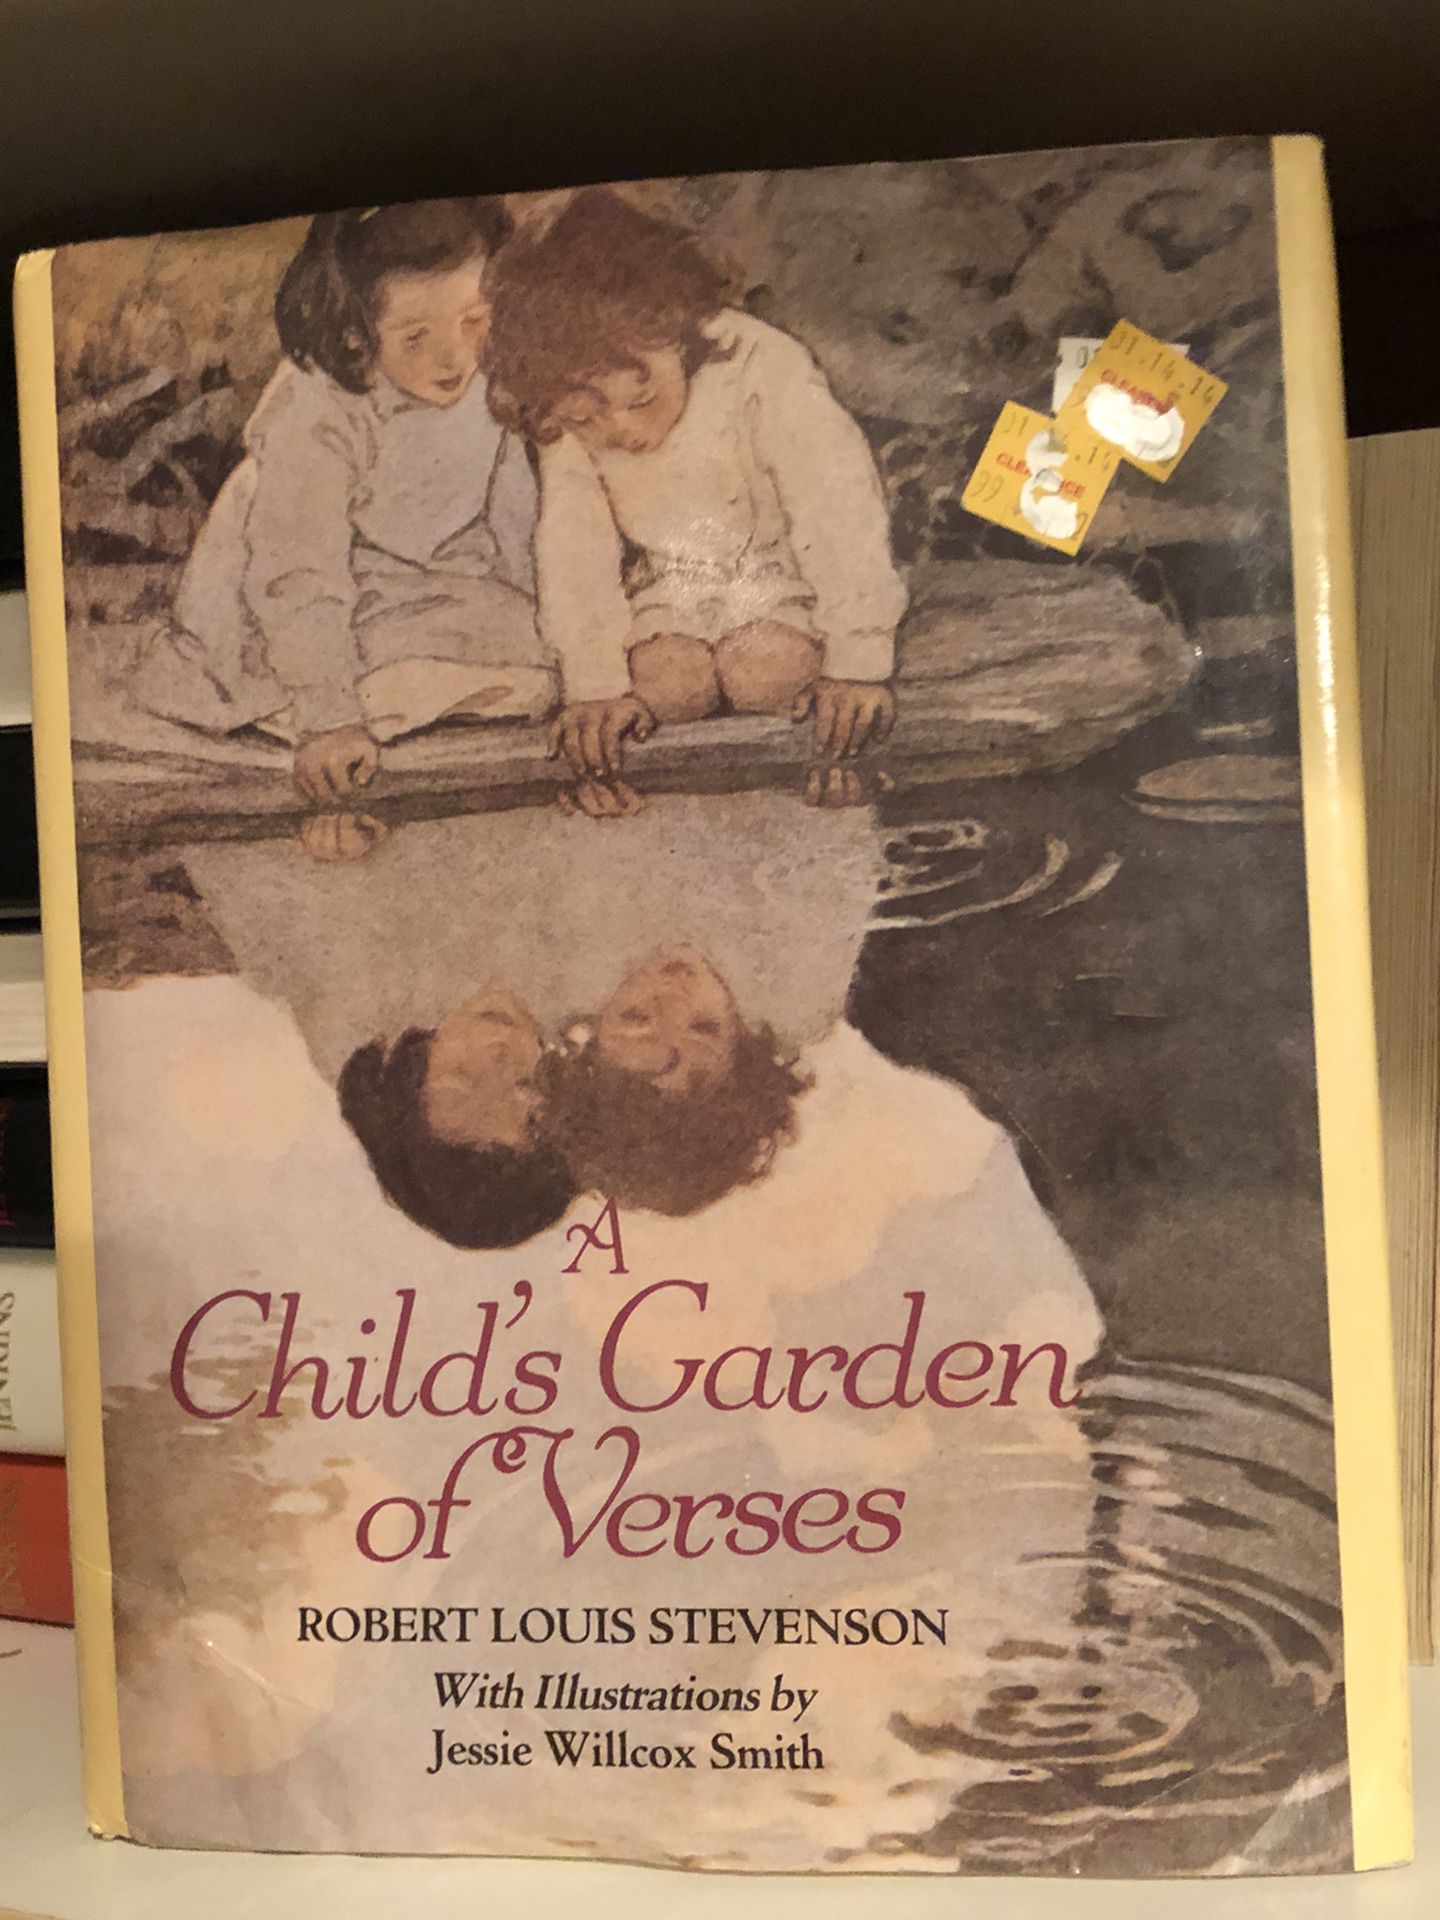 A Child’s Garden of verses book by Robert Louis Stevenson vintage hardcover book 1985